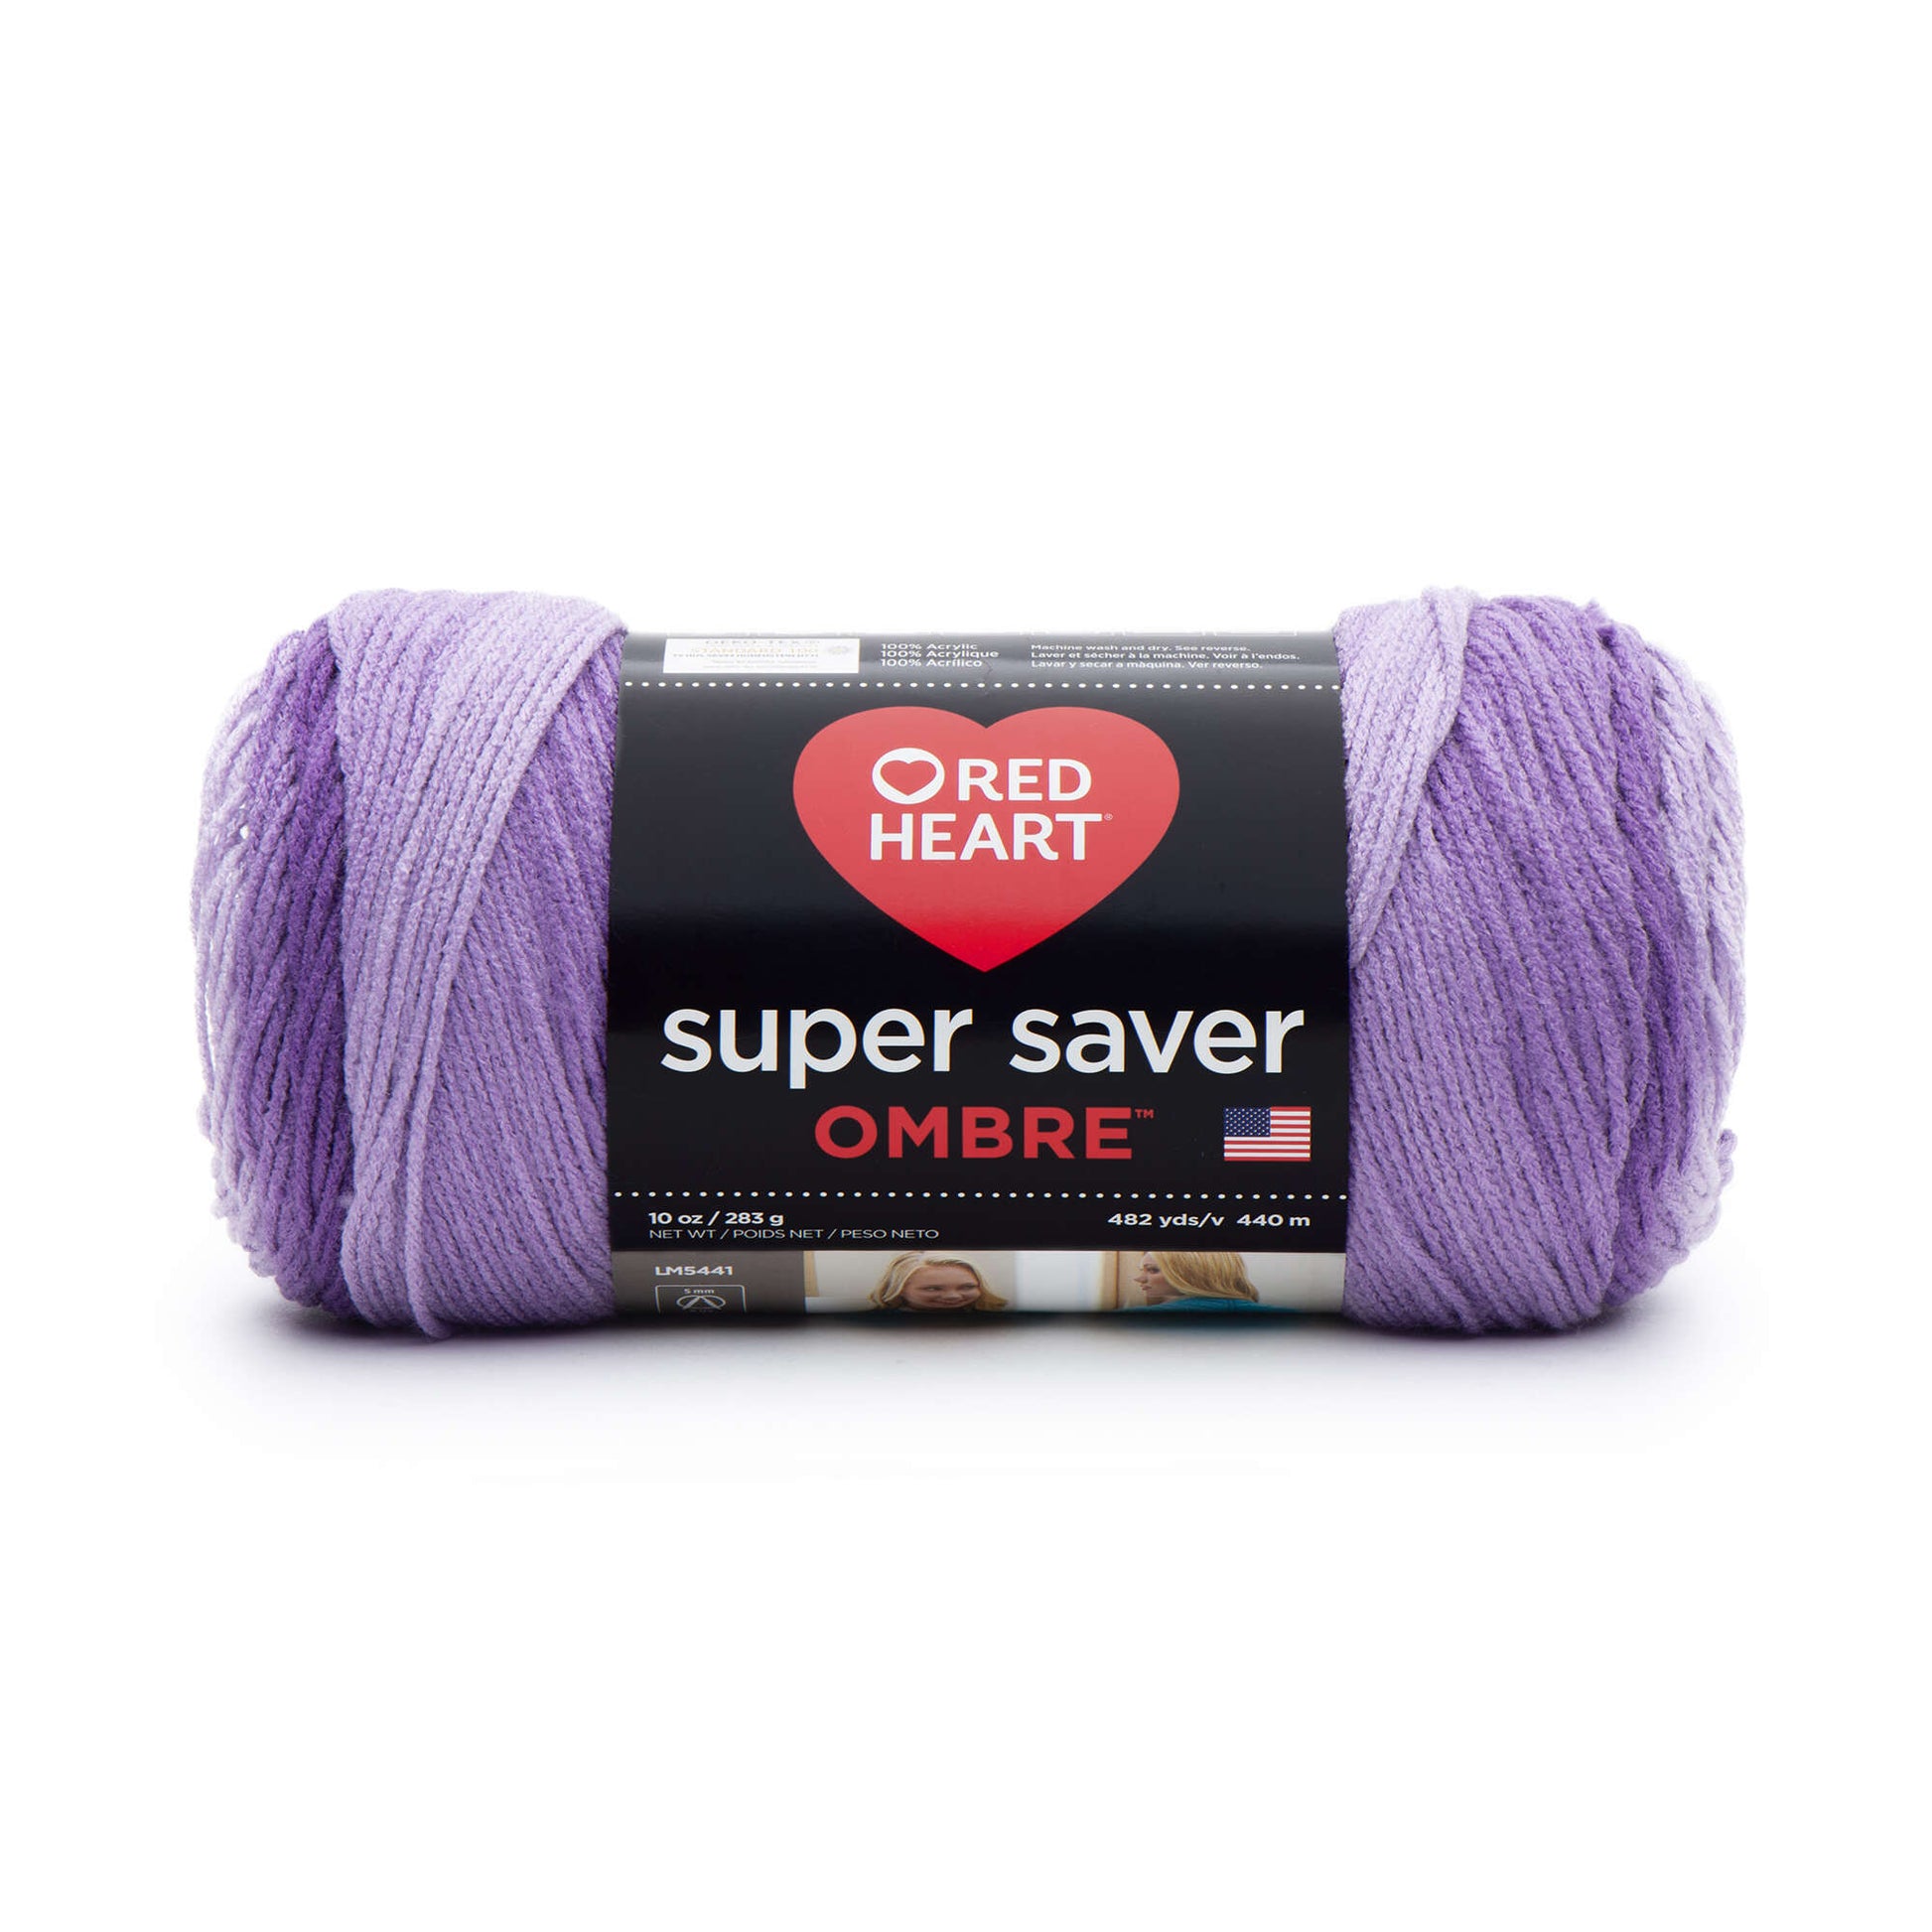 Red Heart Super Saver Ombre Yarn Violet